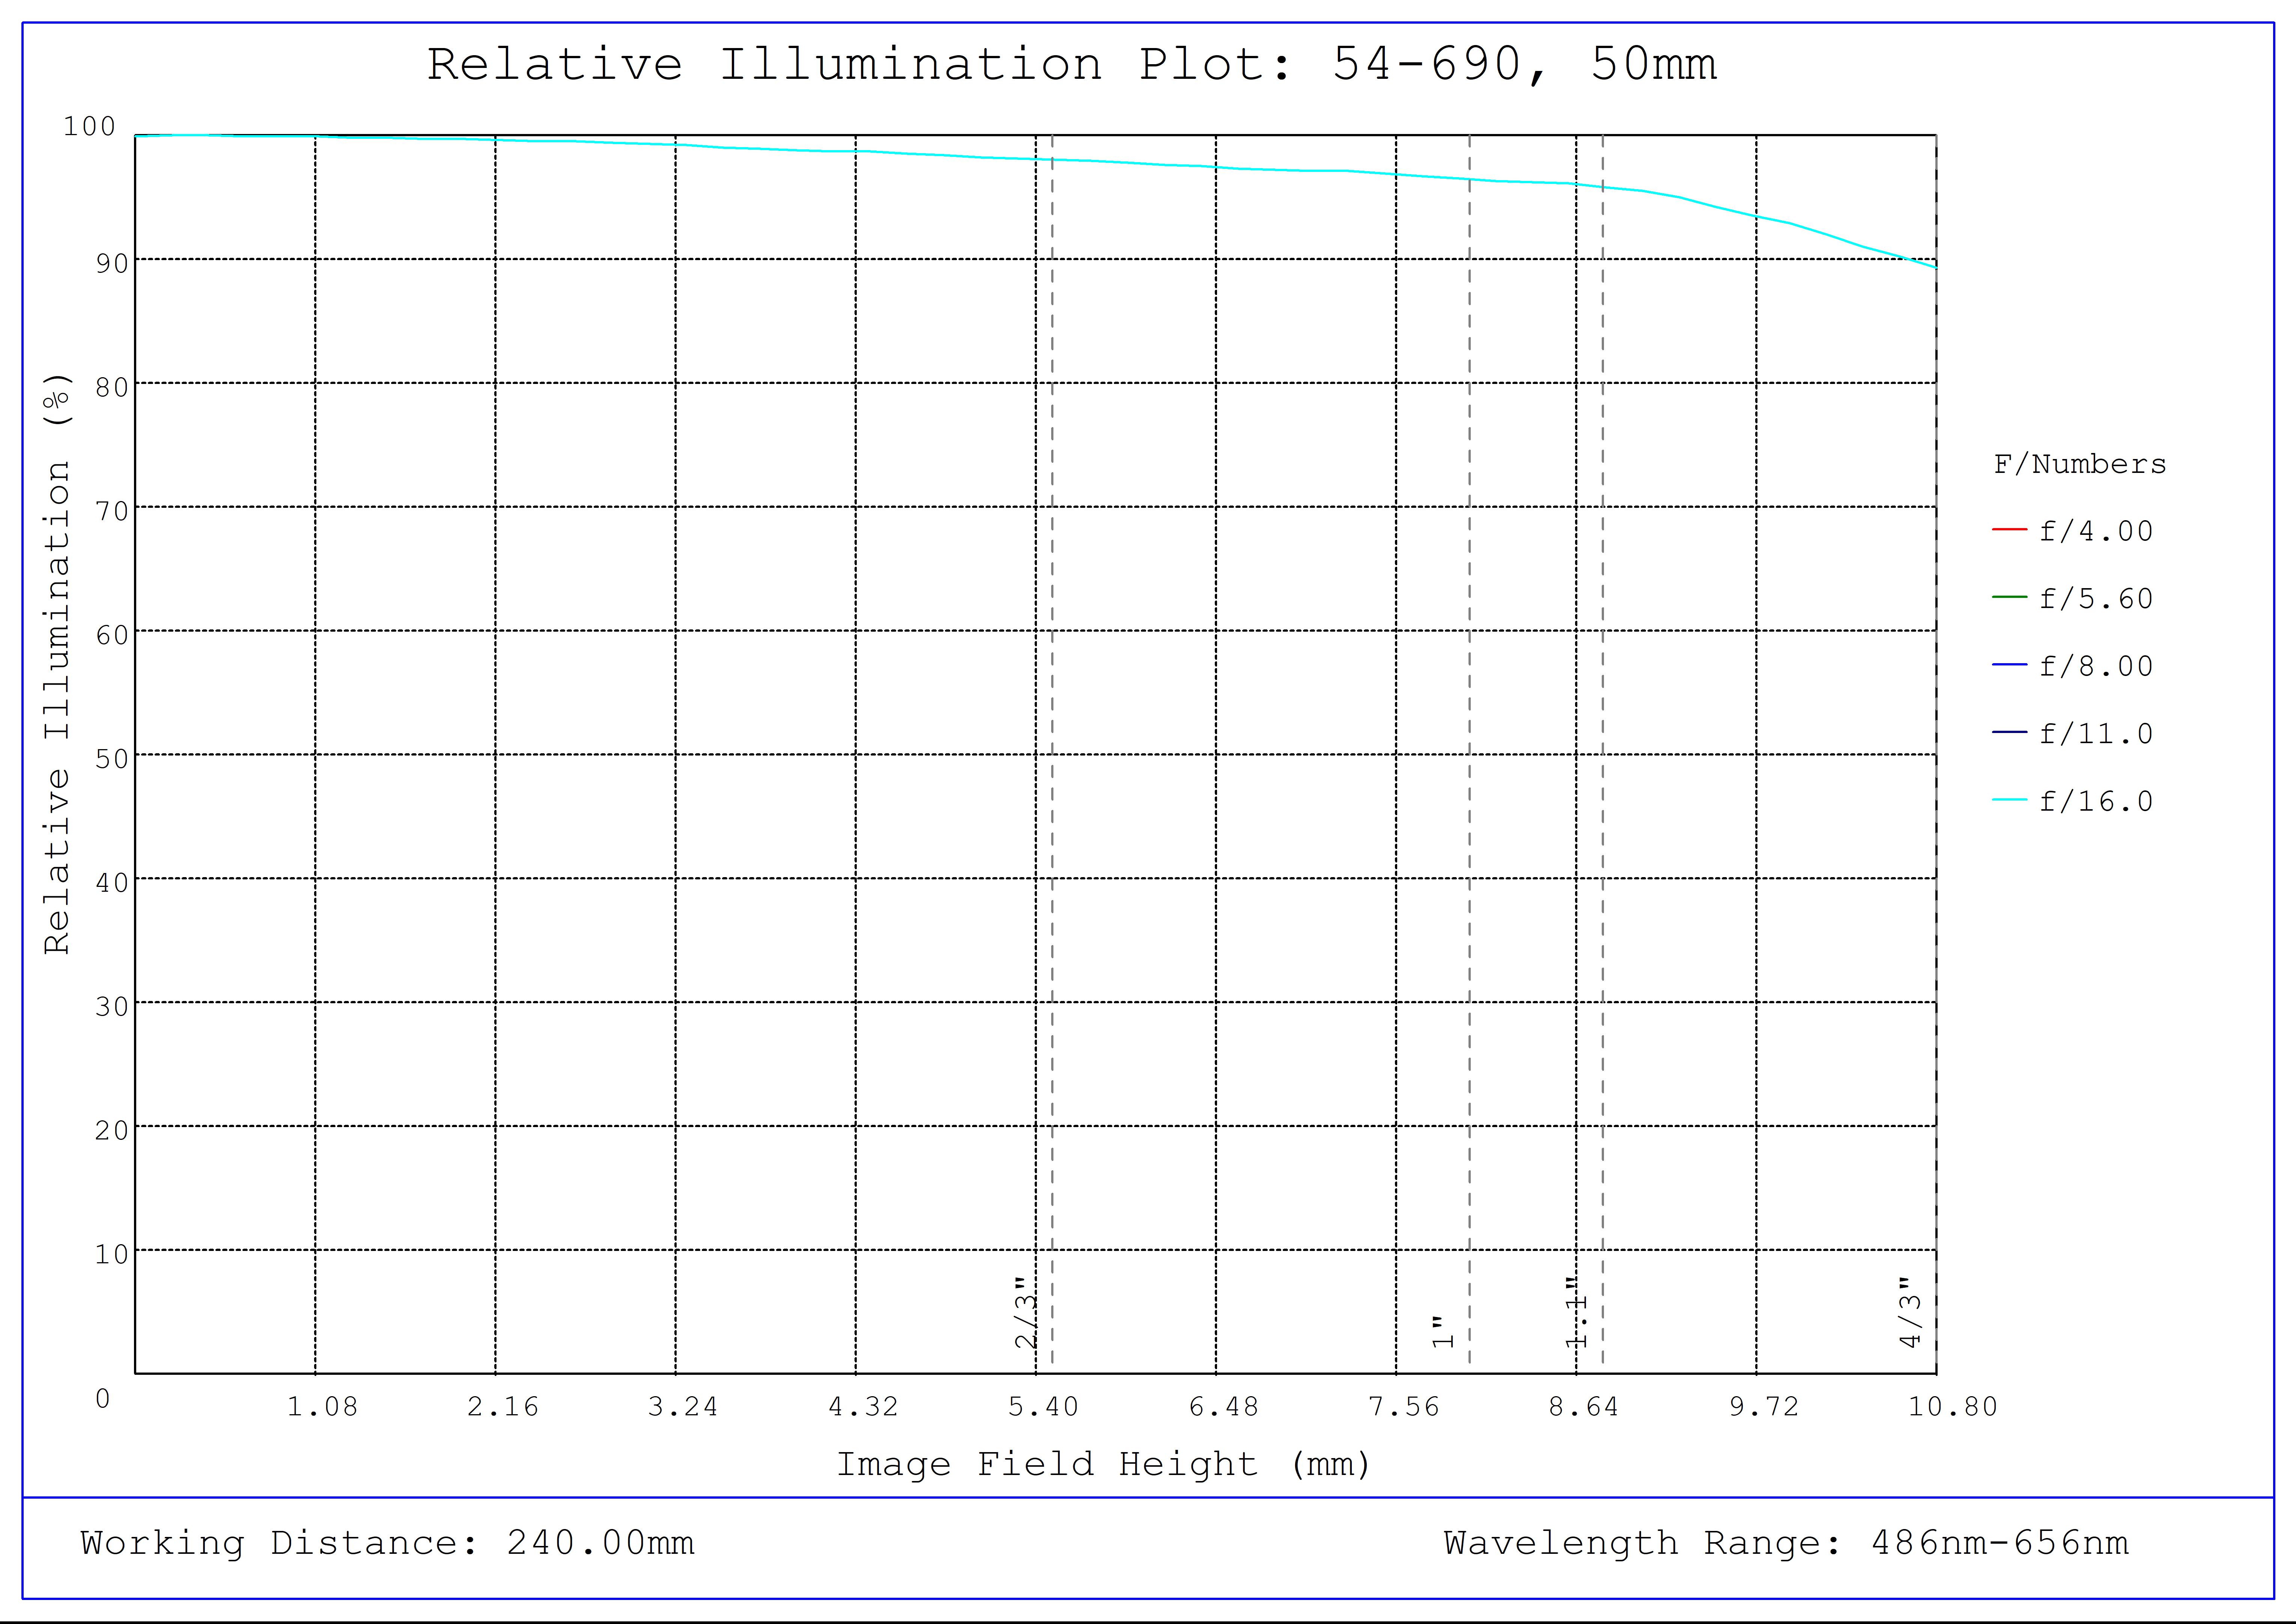 #54-690, 50mm DG Series Fixed Focal Length Lens, Relative Illumination Plot